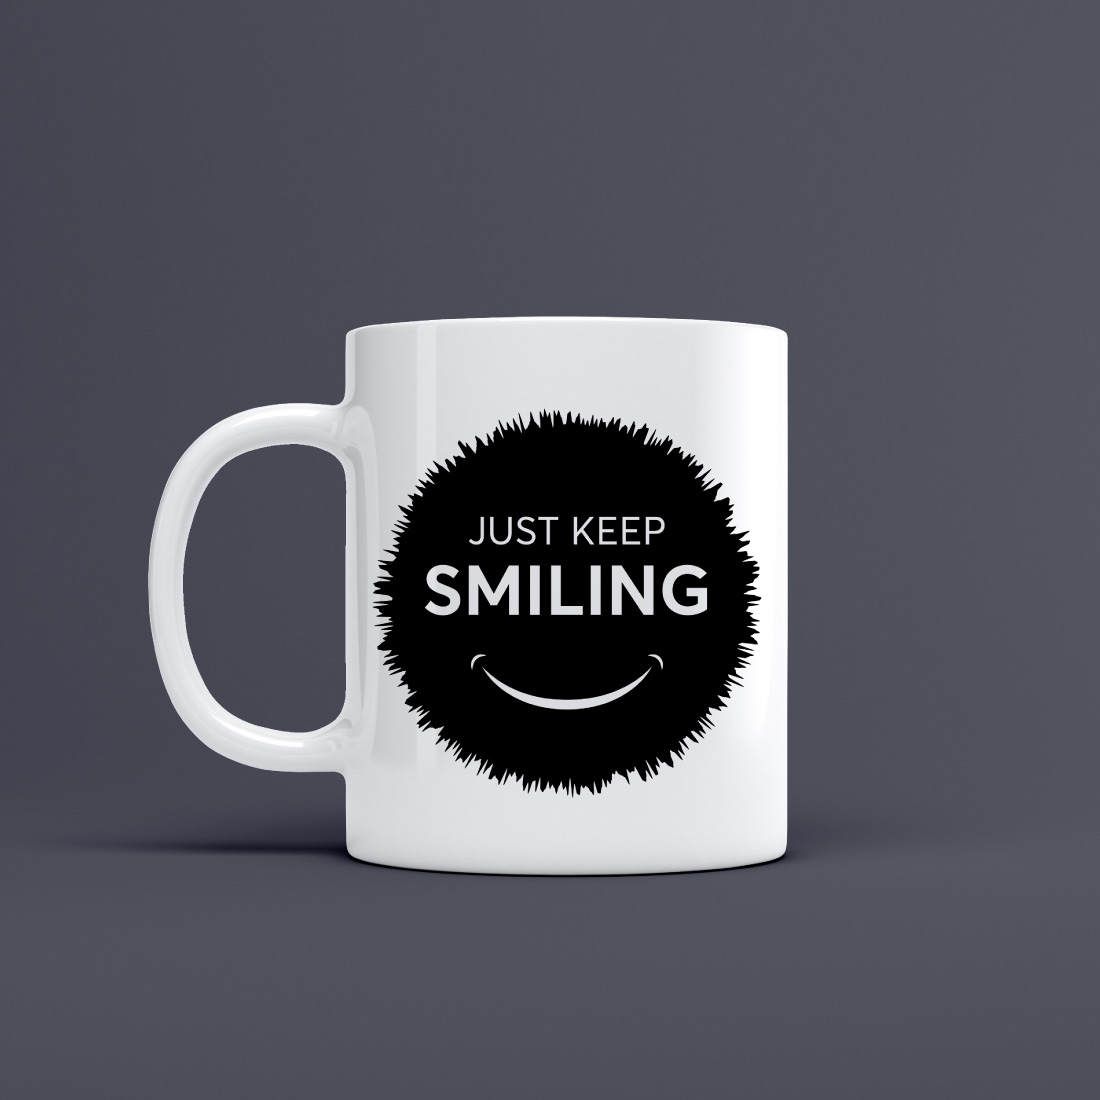 just keep smiling mug design 161